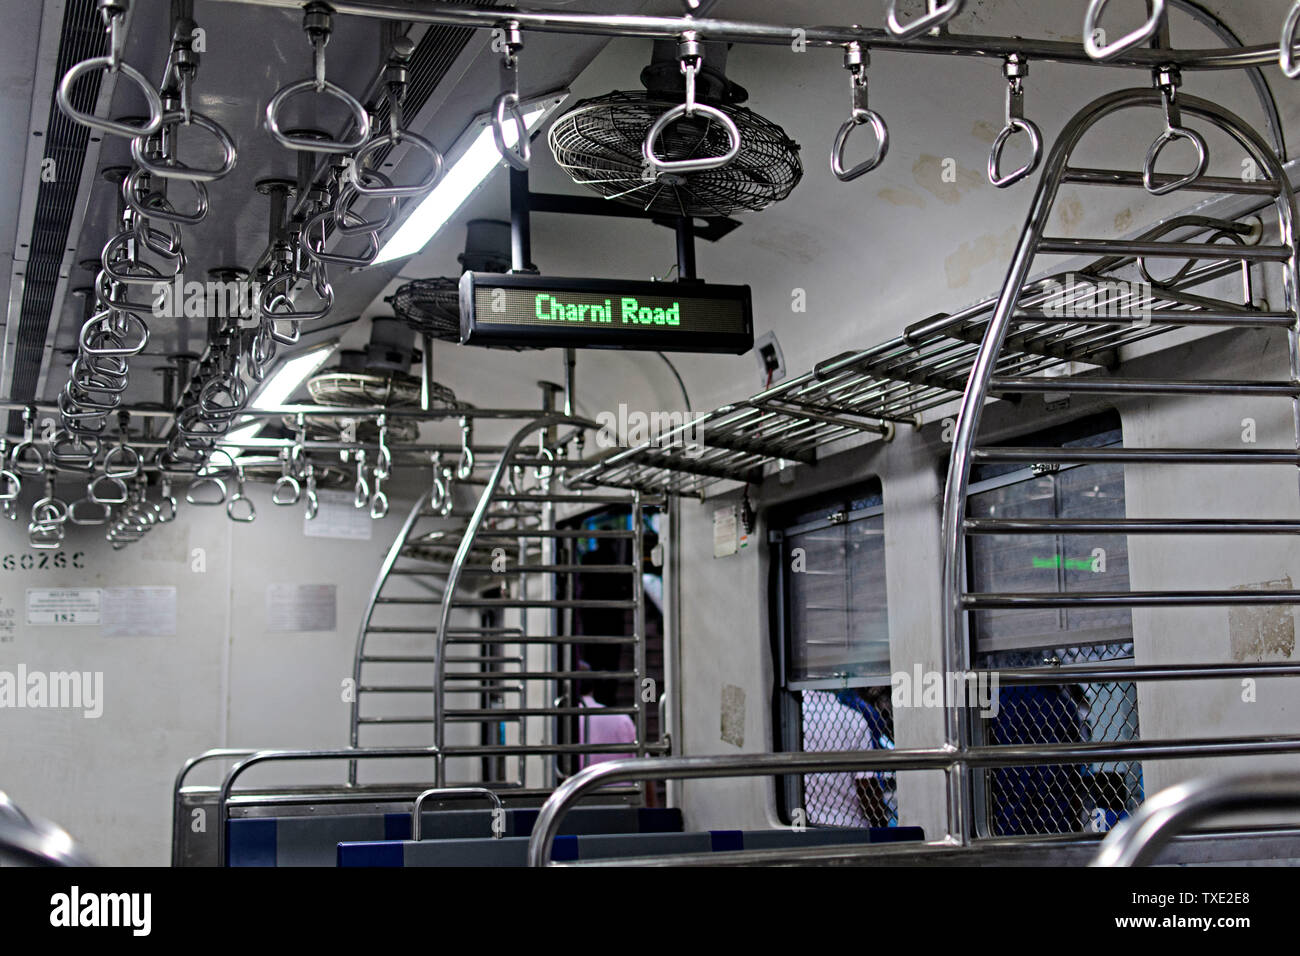 Anzeige im lokalen Zug Charni Straße, Mumbai, Maharashtra, Indien, Asien Stockfoto